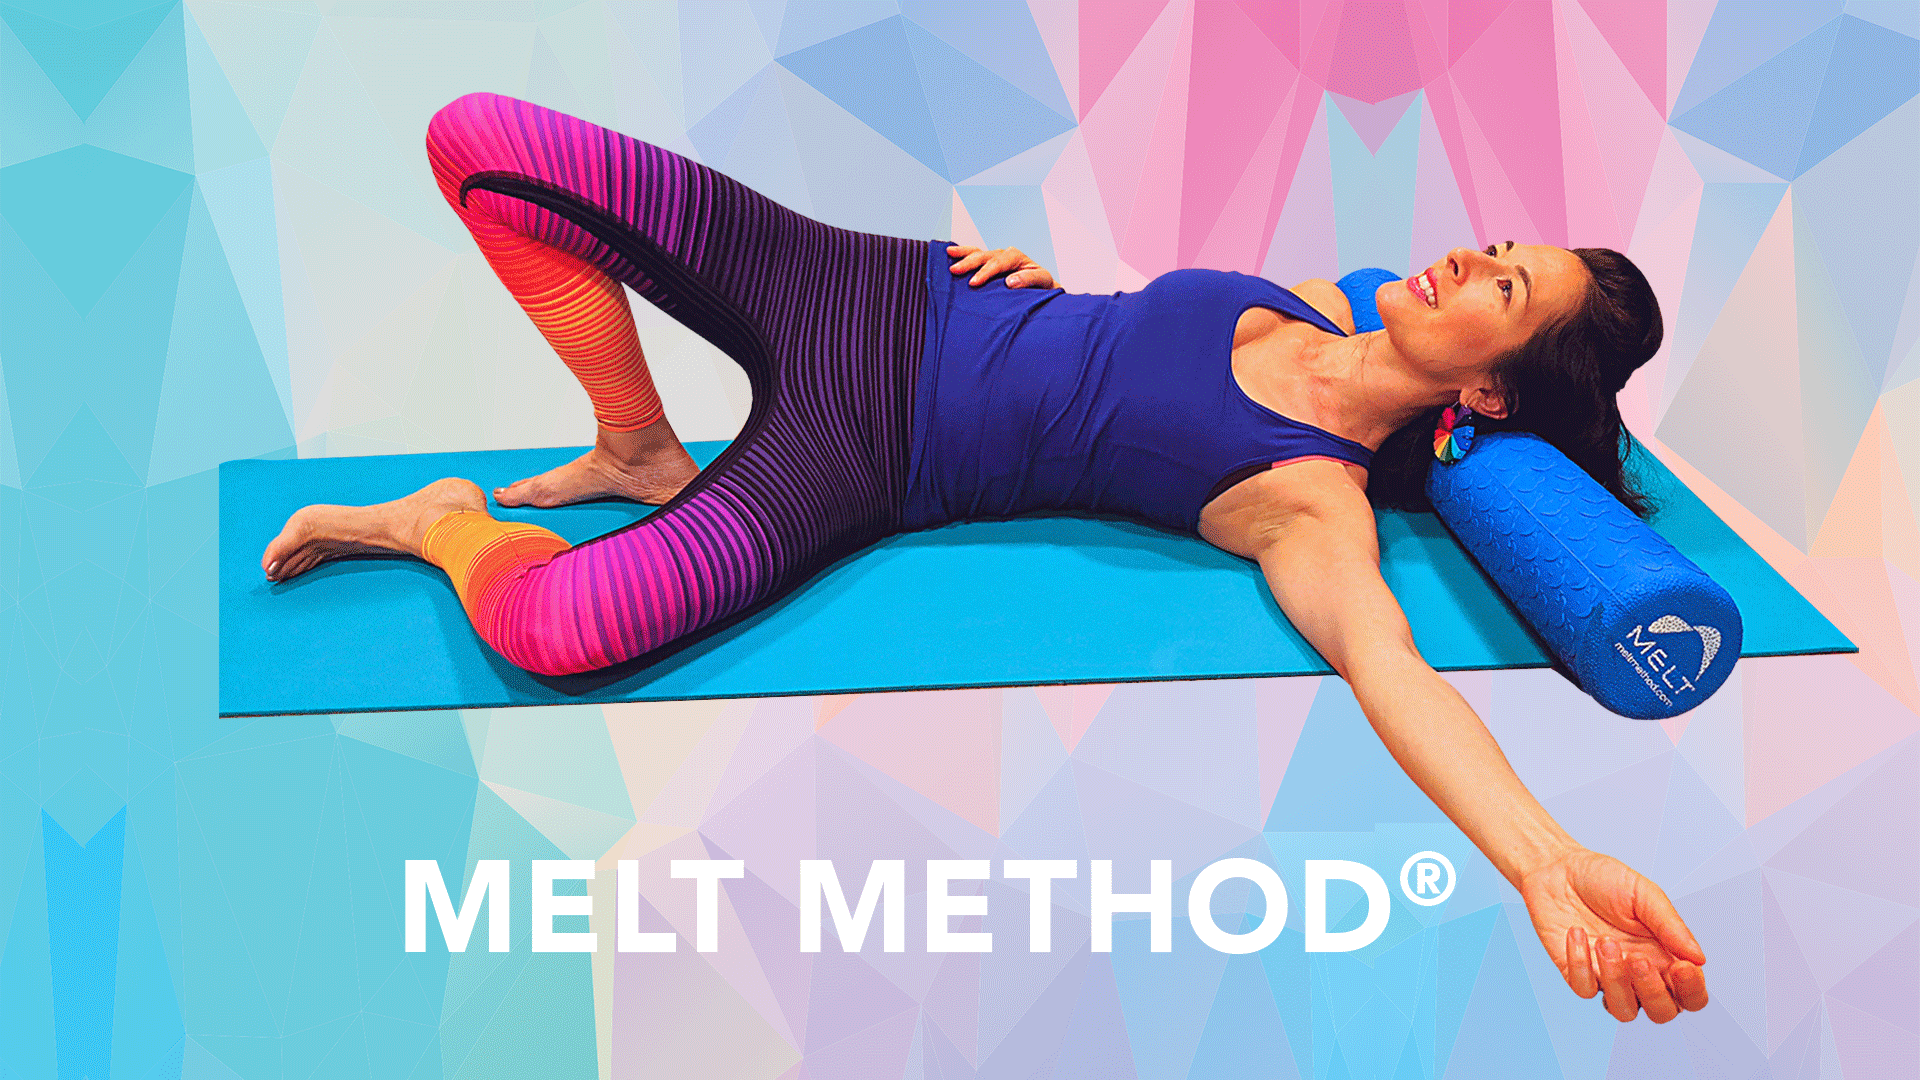 MELT Method - MELT Method added a new photo.